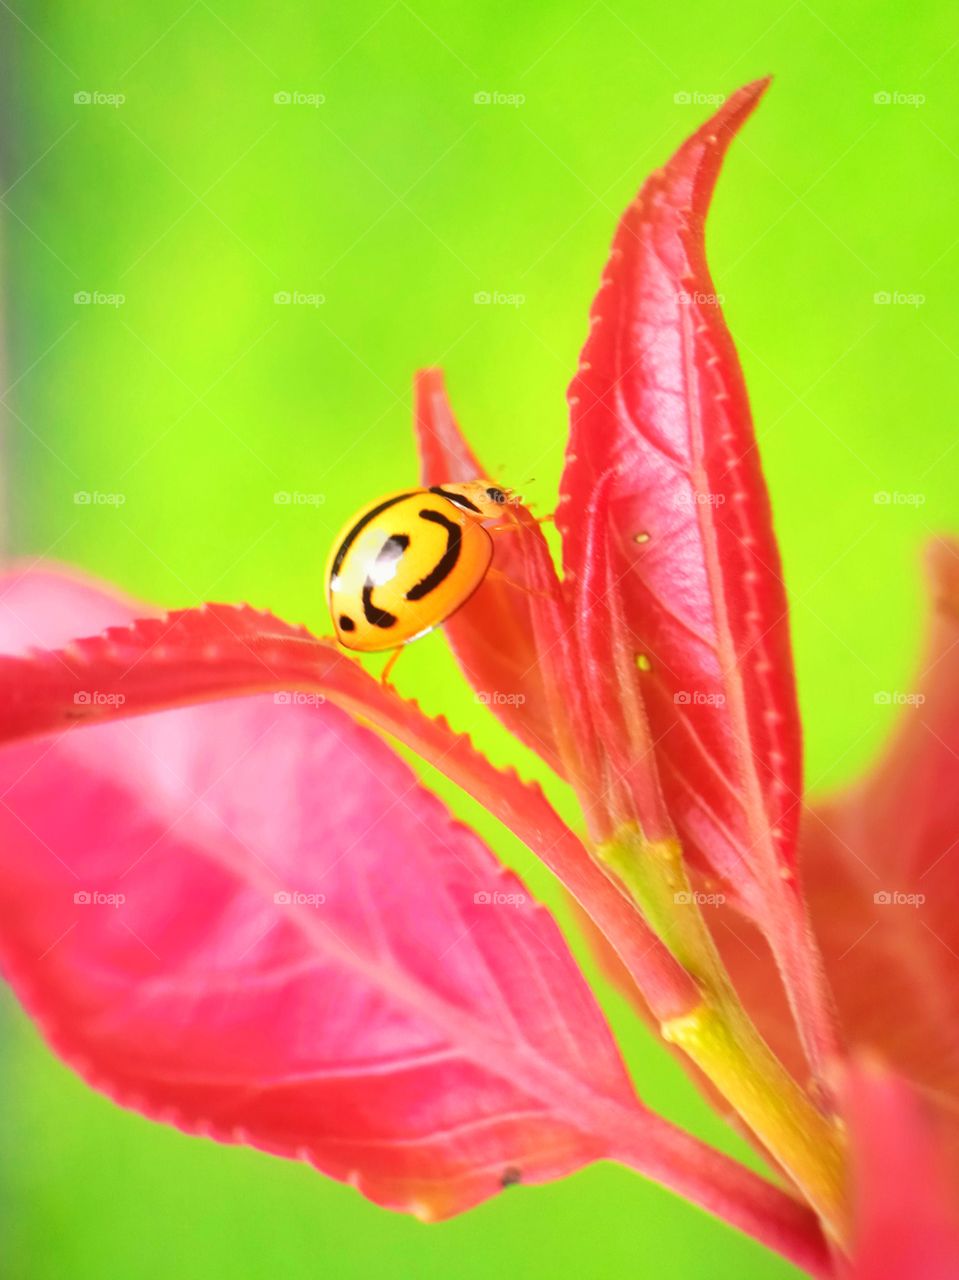 Ladybug on Red plant